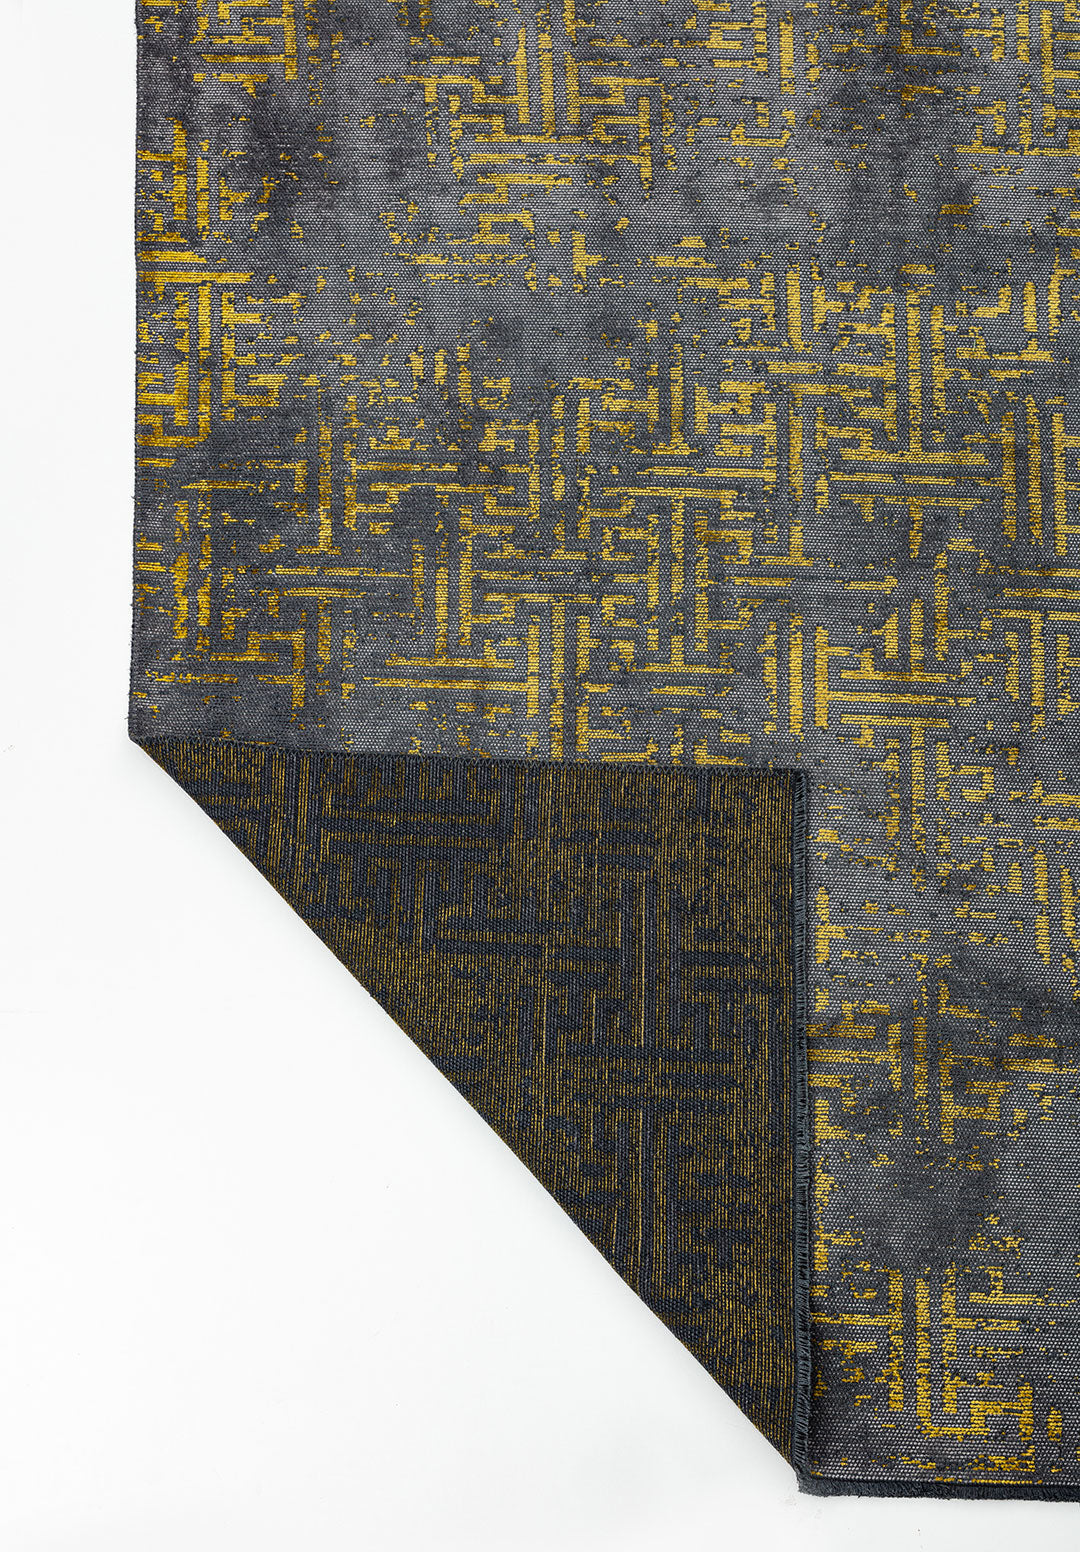 Labyrinth Grey - Yellow Rug Rugs - Venetto Design Venettodesign.com